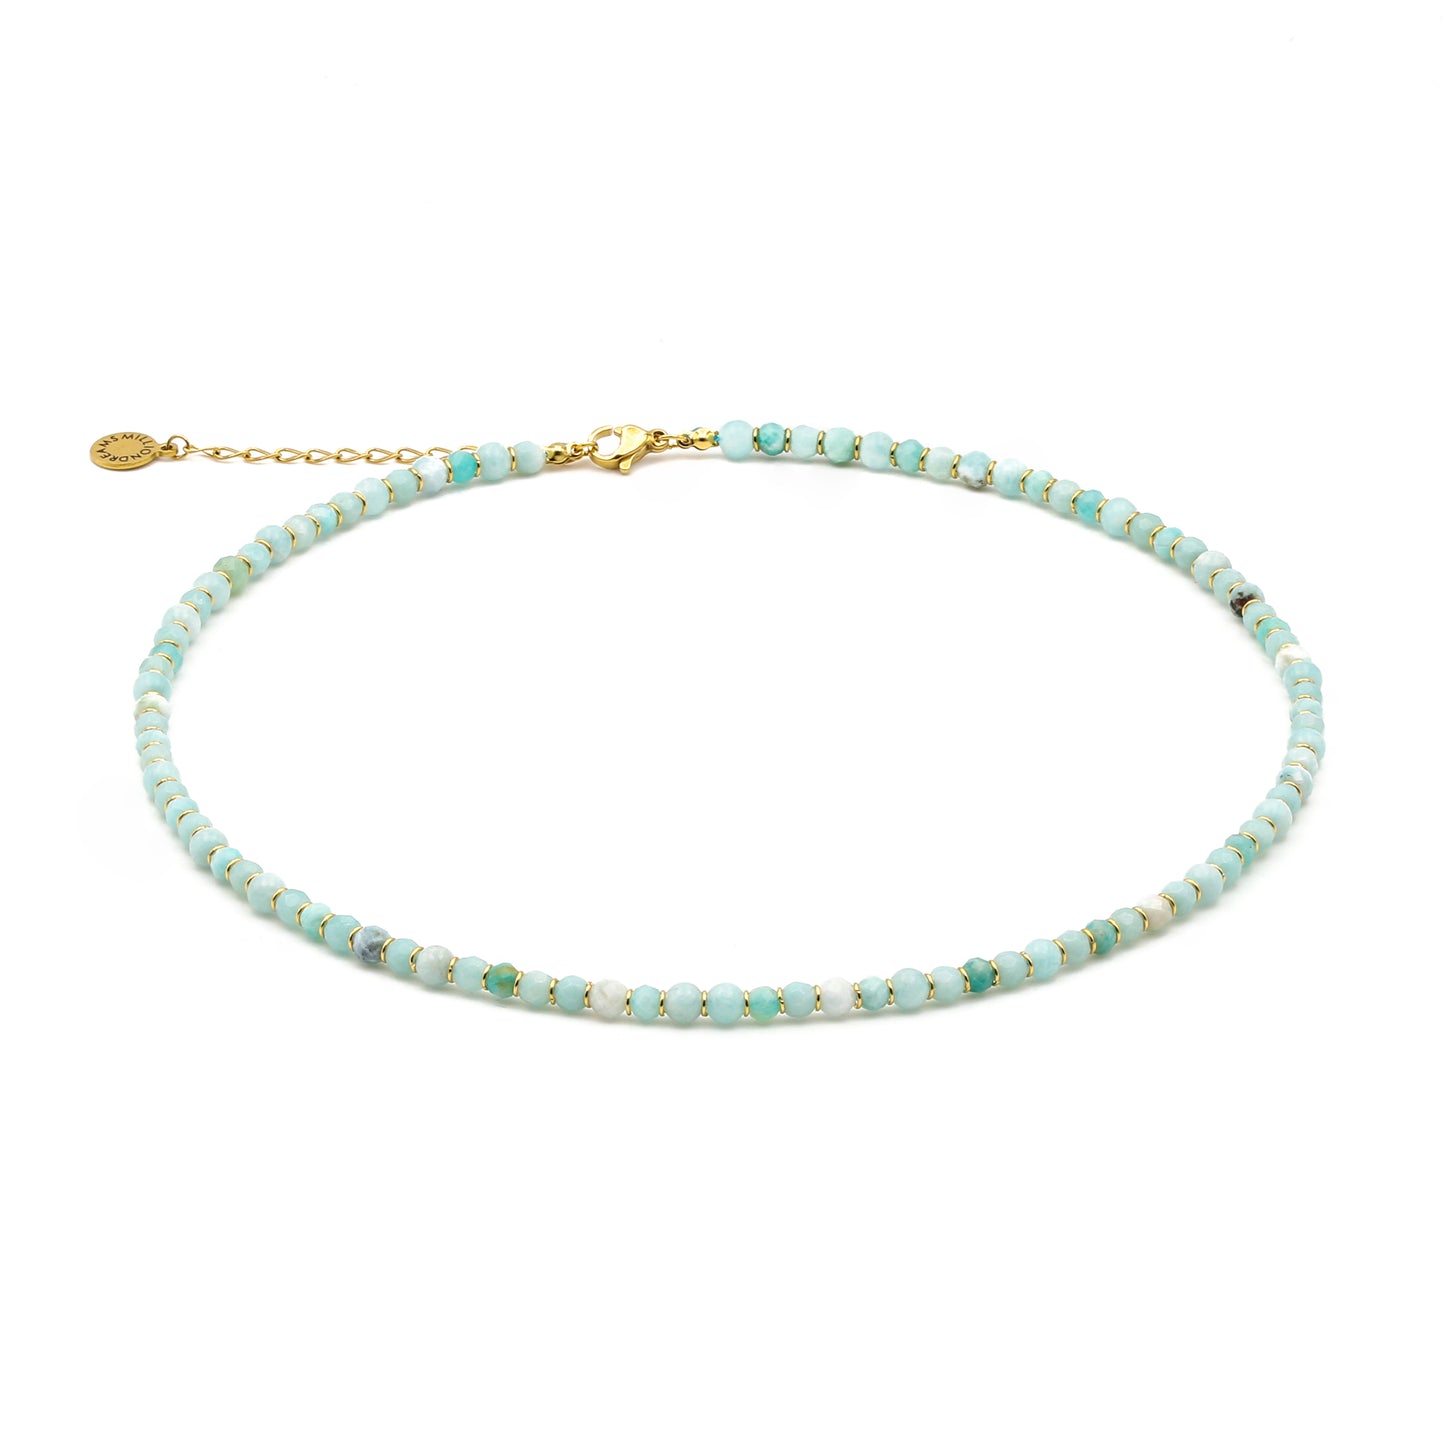 Necklace - "Aqua Viridis" Choker - CAORLE THE SMALL VENICE Collection